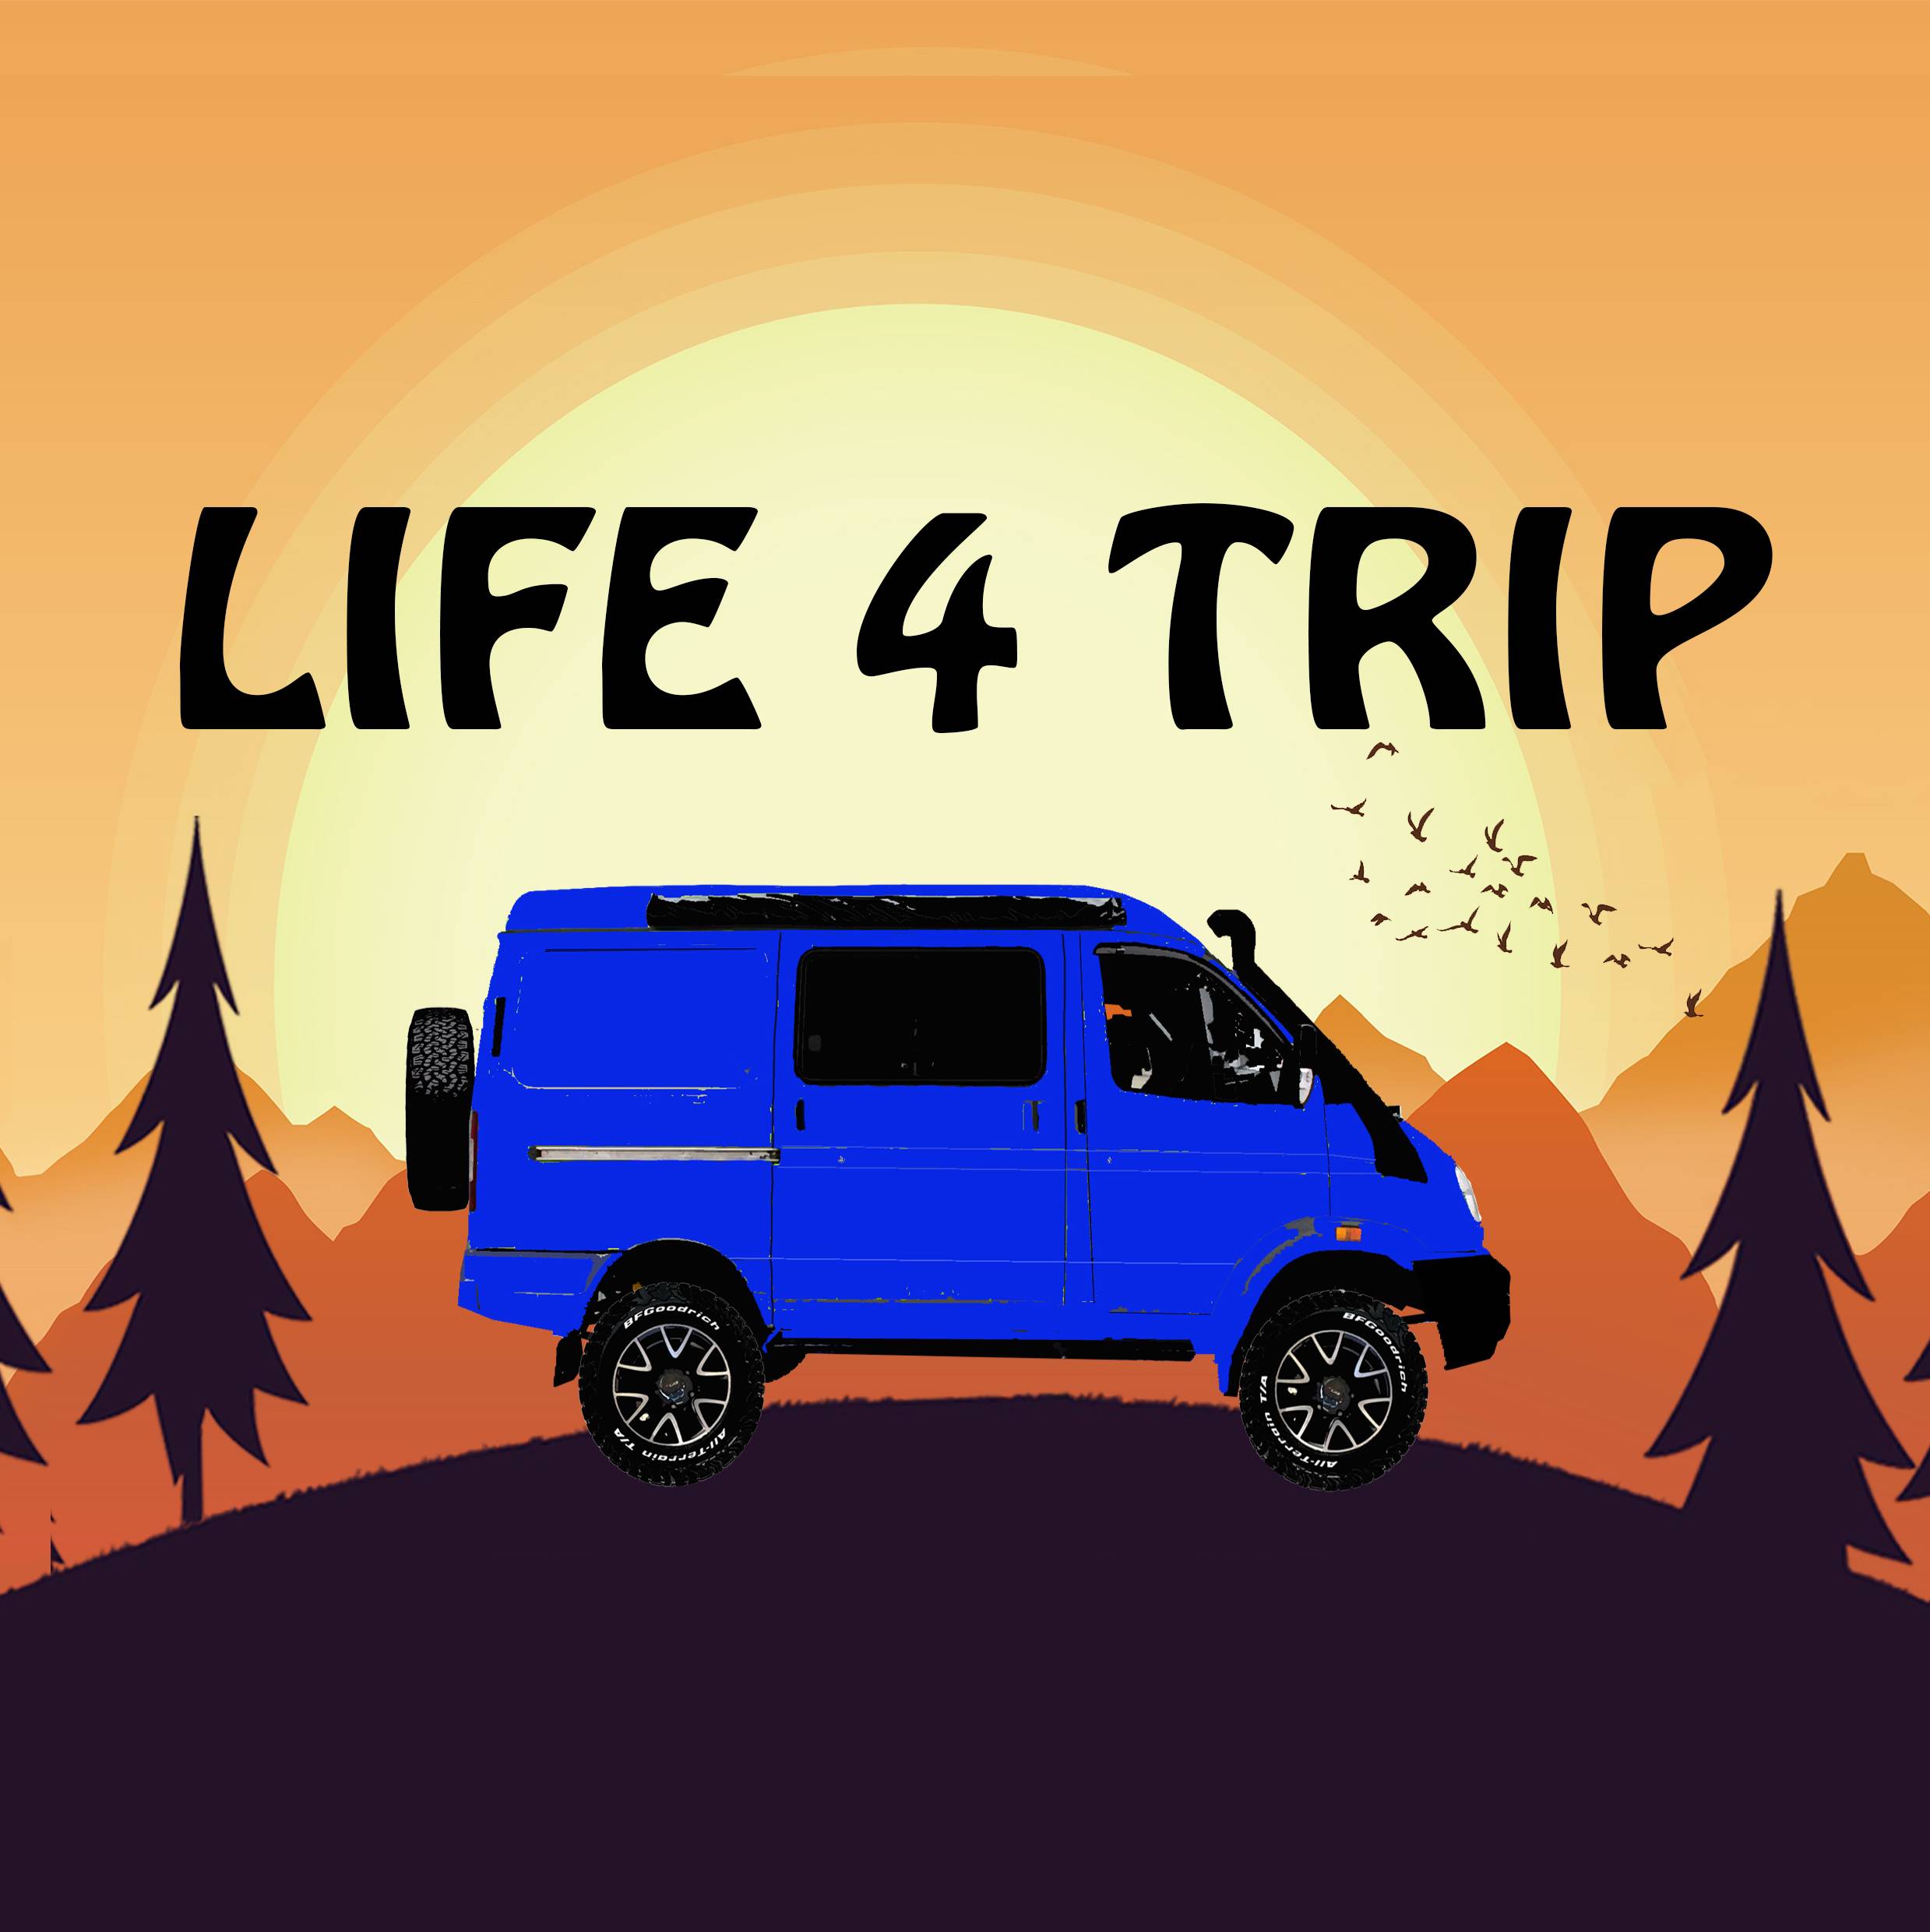 Life trip am. Life a trip. Just trip Life.